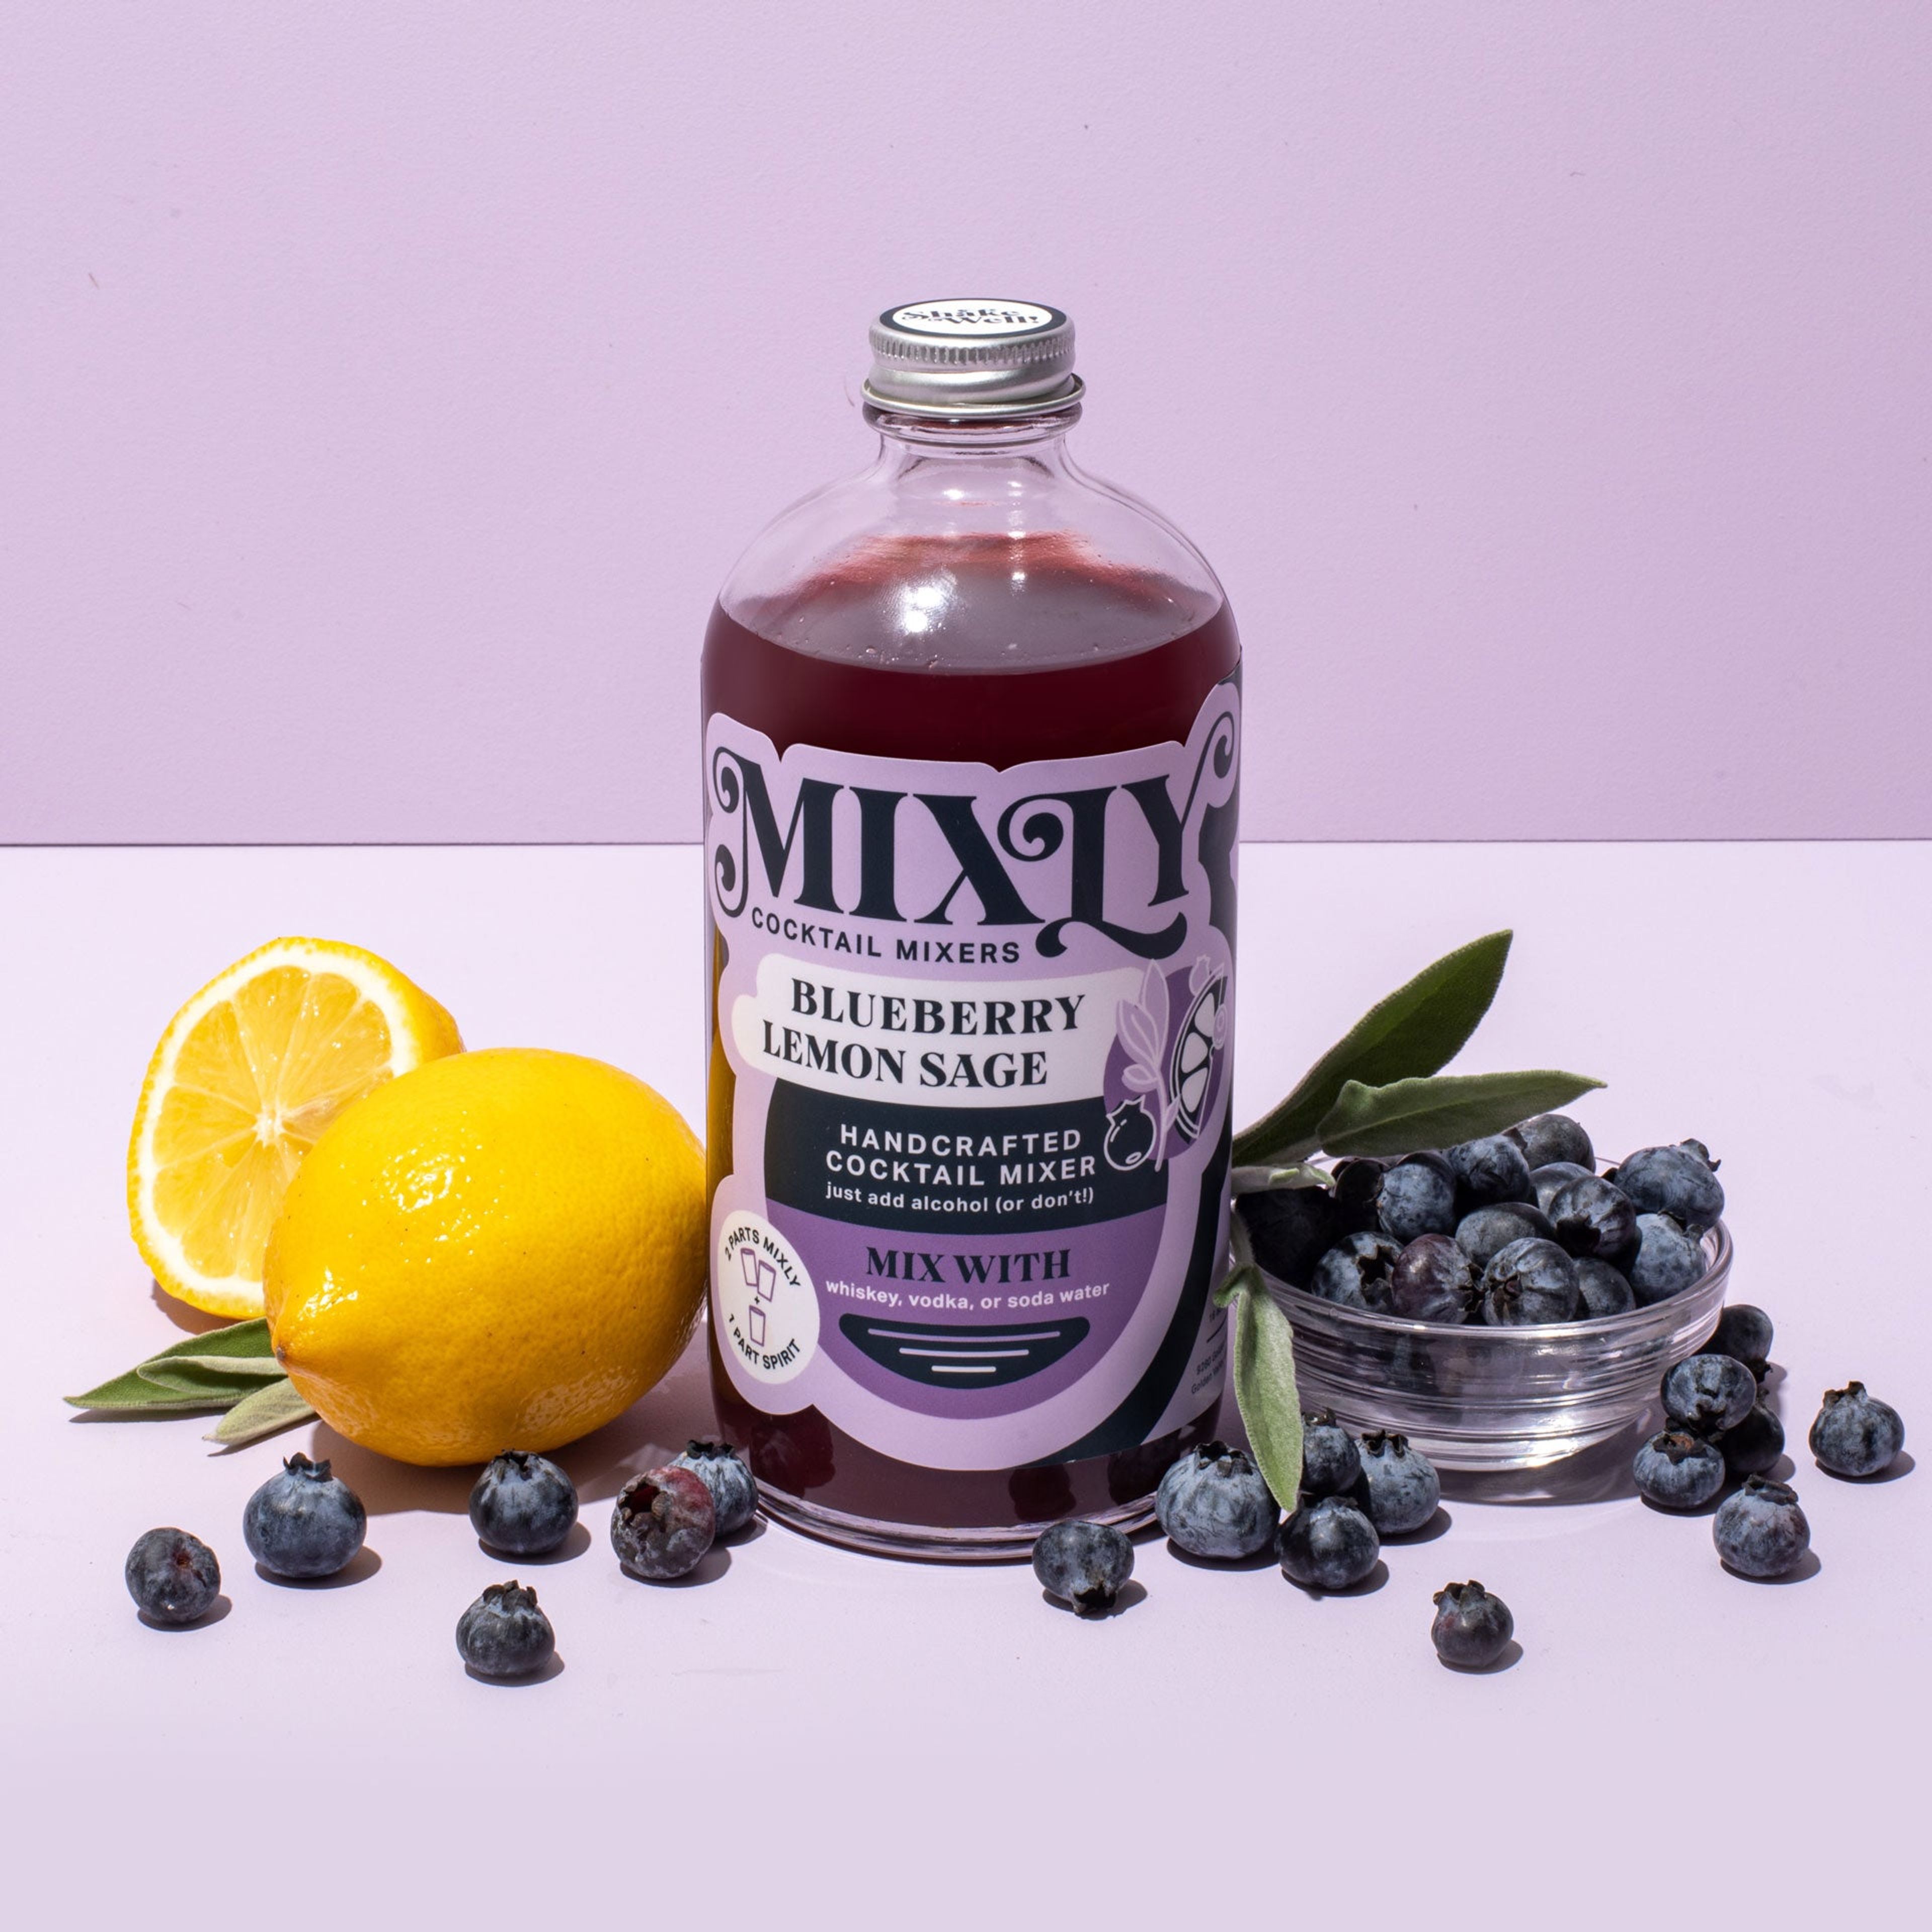 Blueberry Lemon Sage Mixer